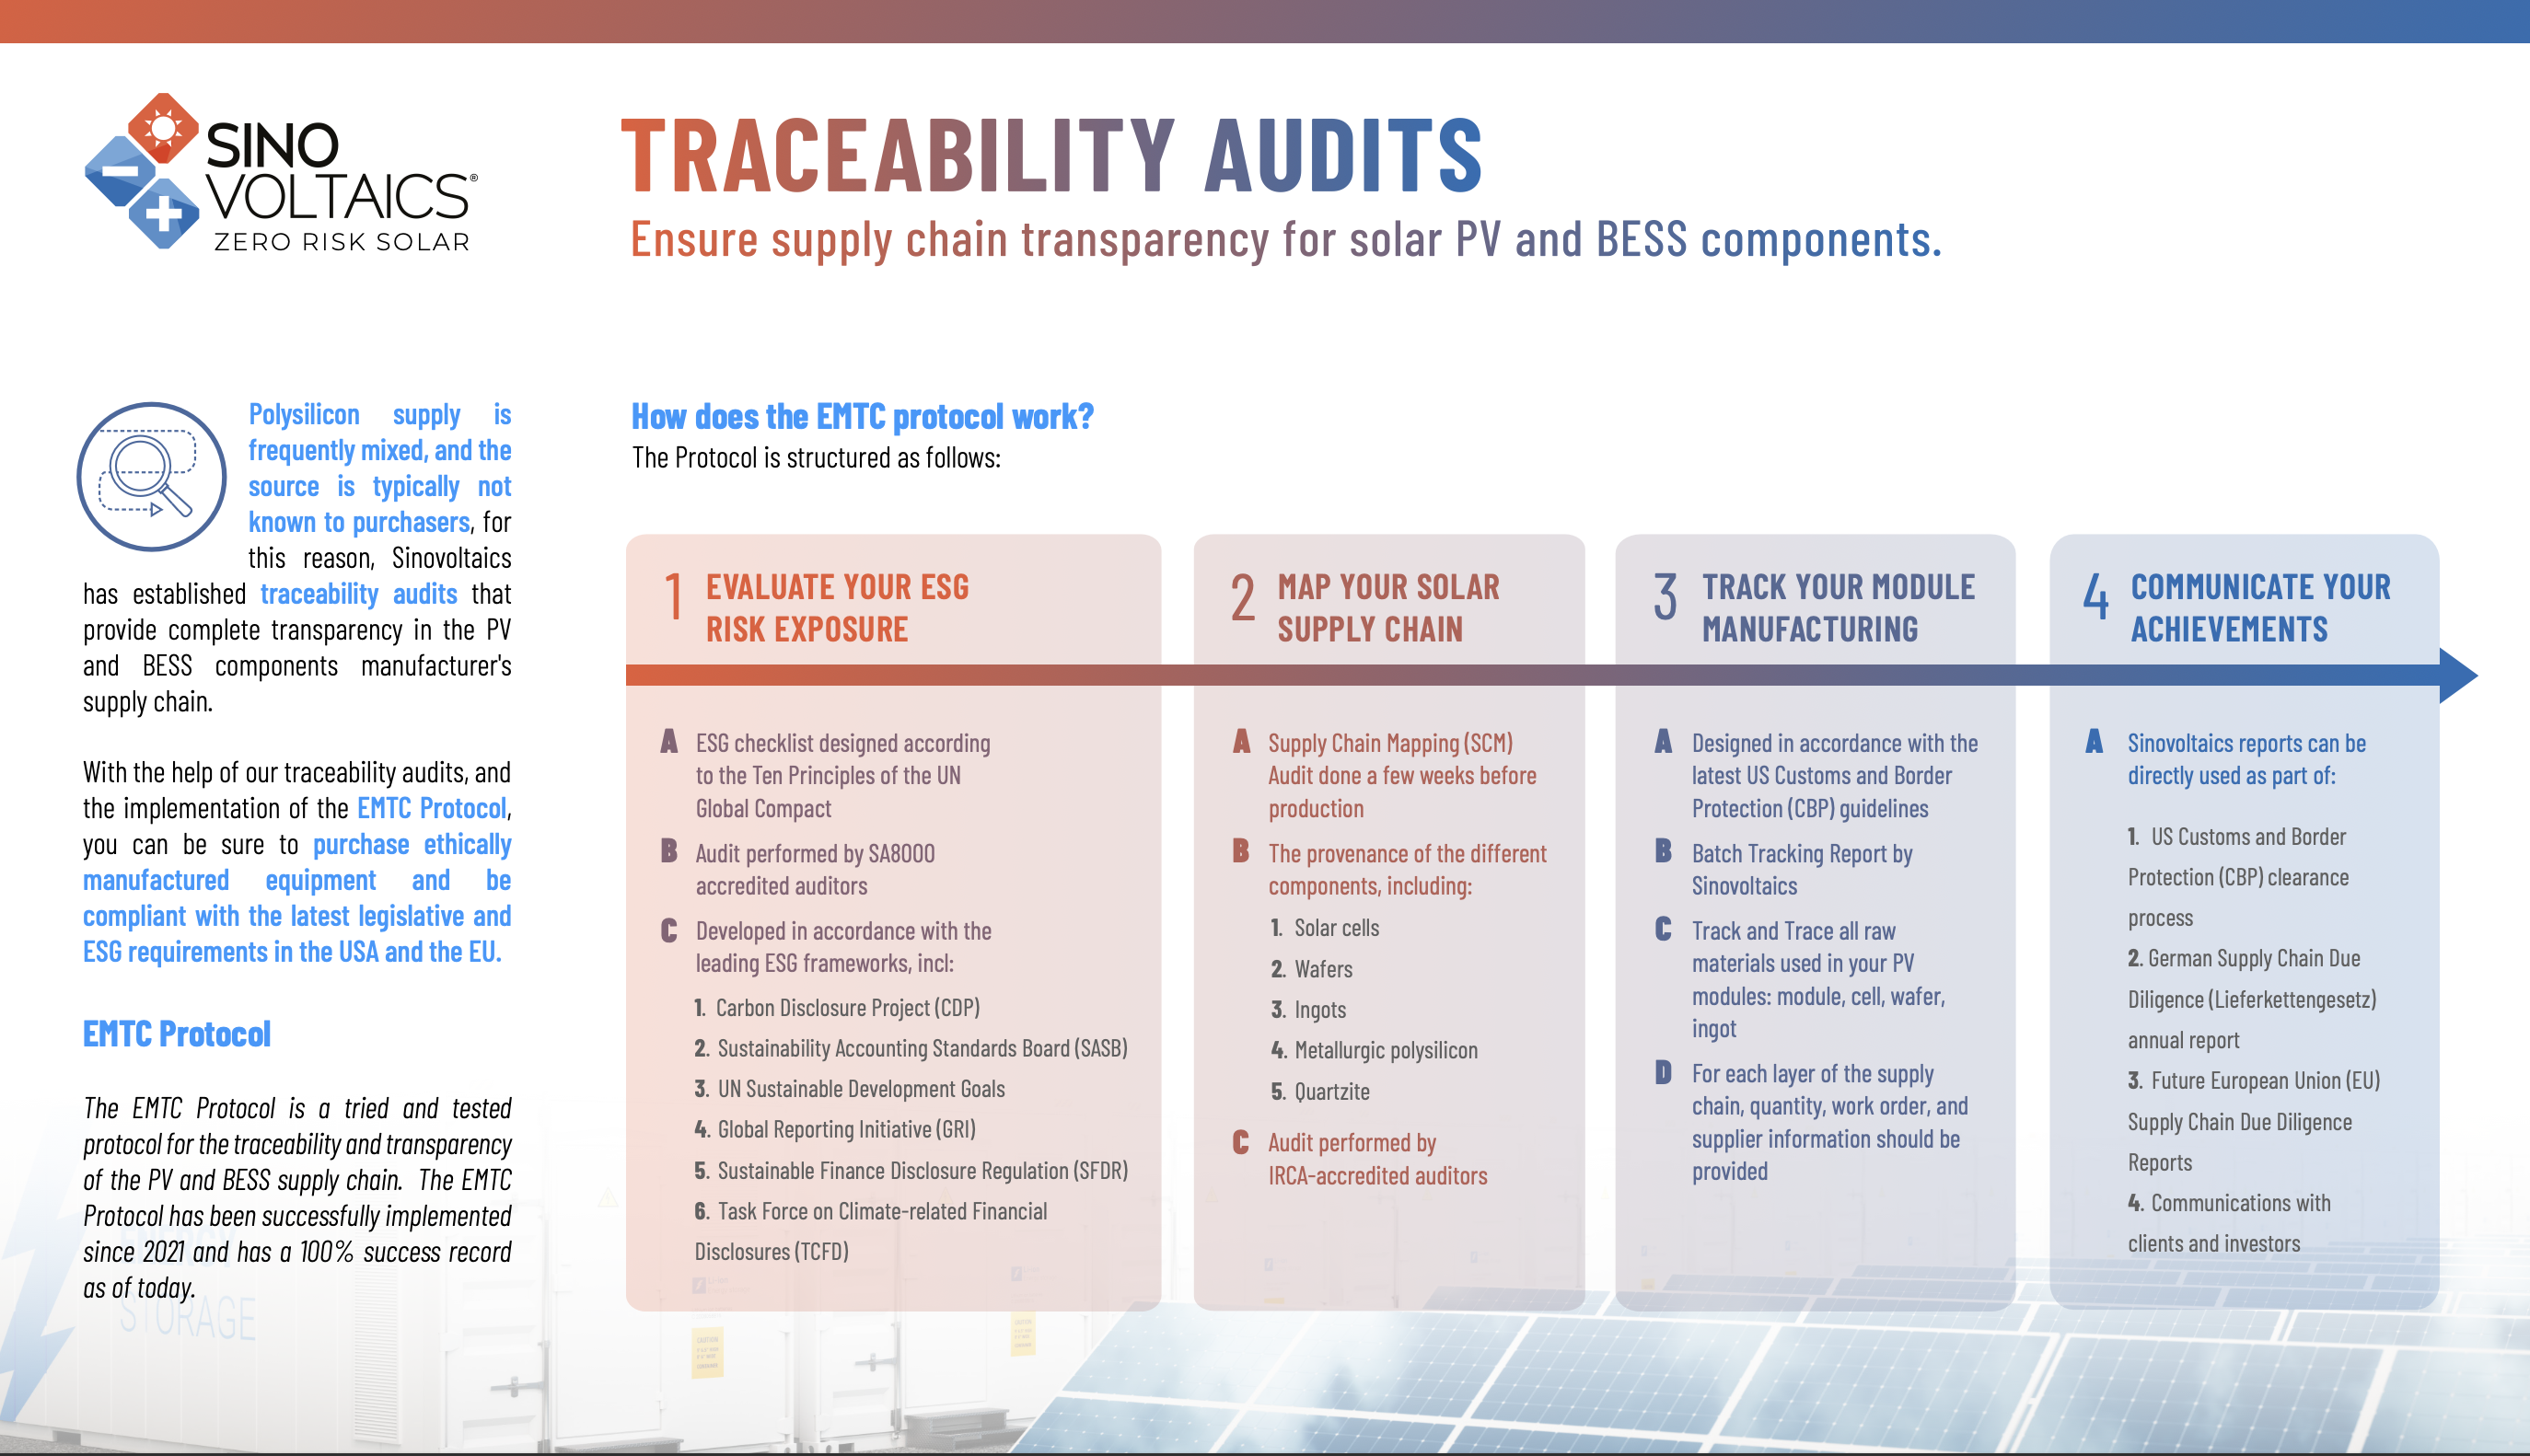 Sinovoltaics Brochure: Traceability Audits